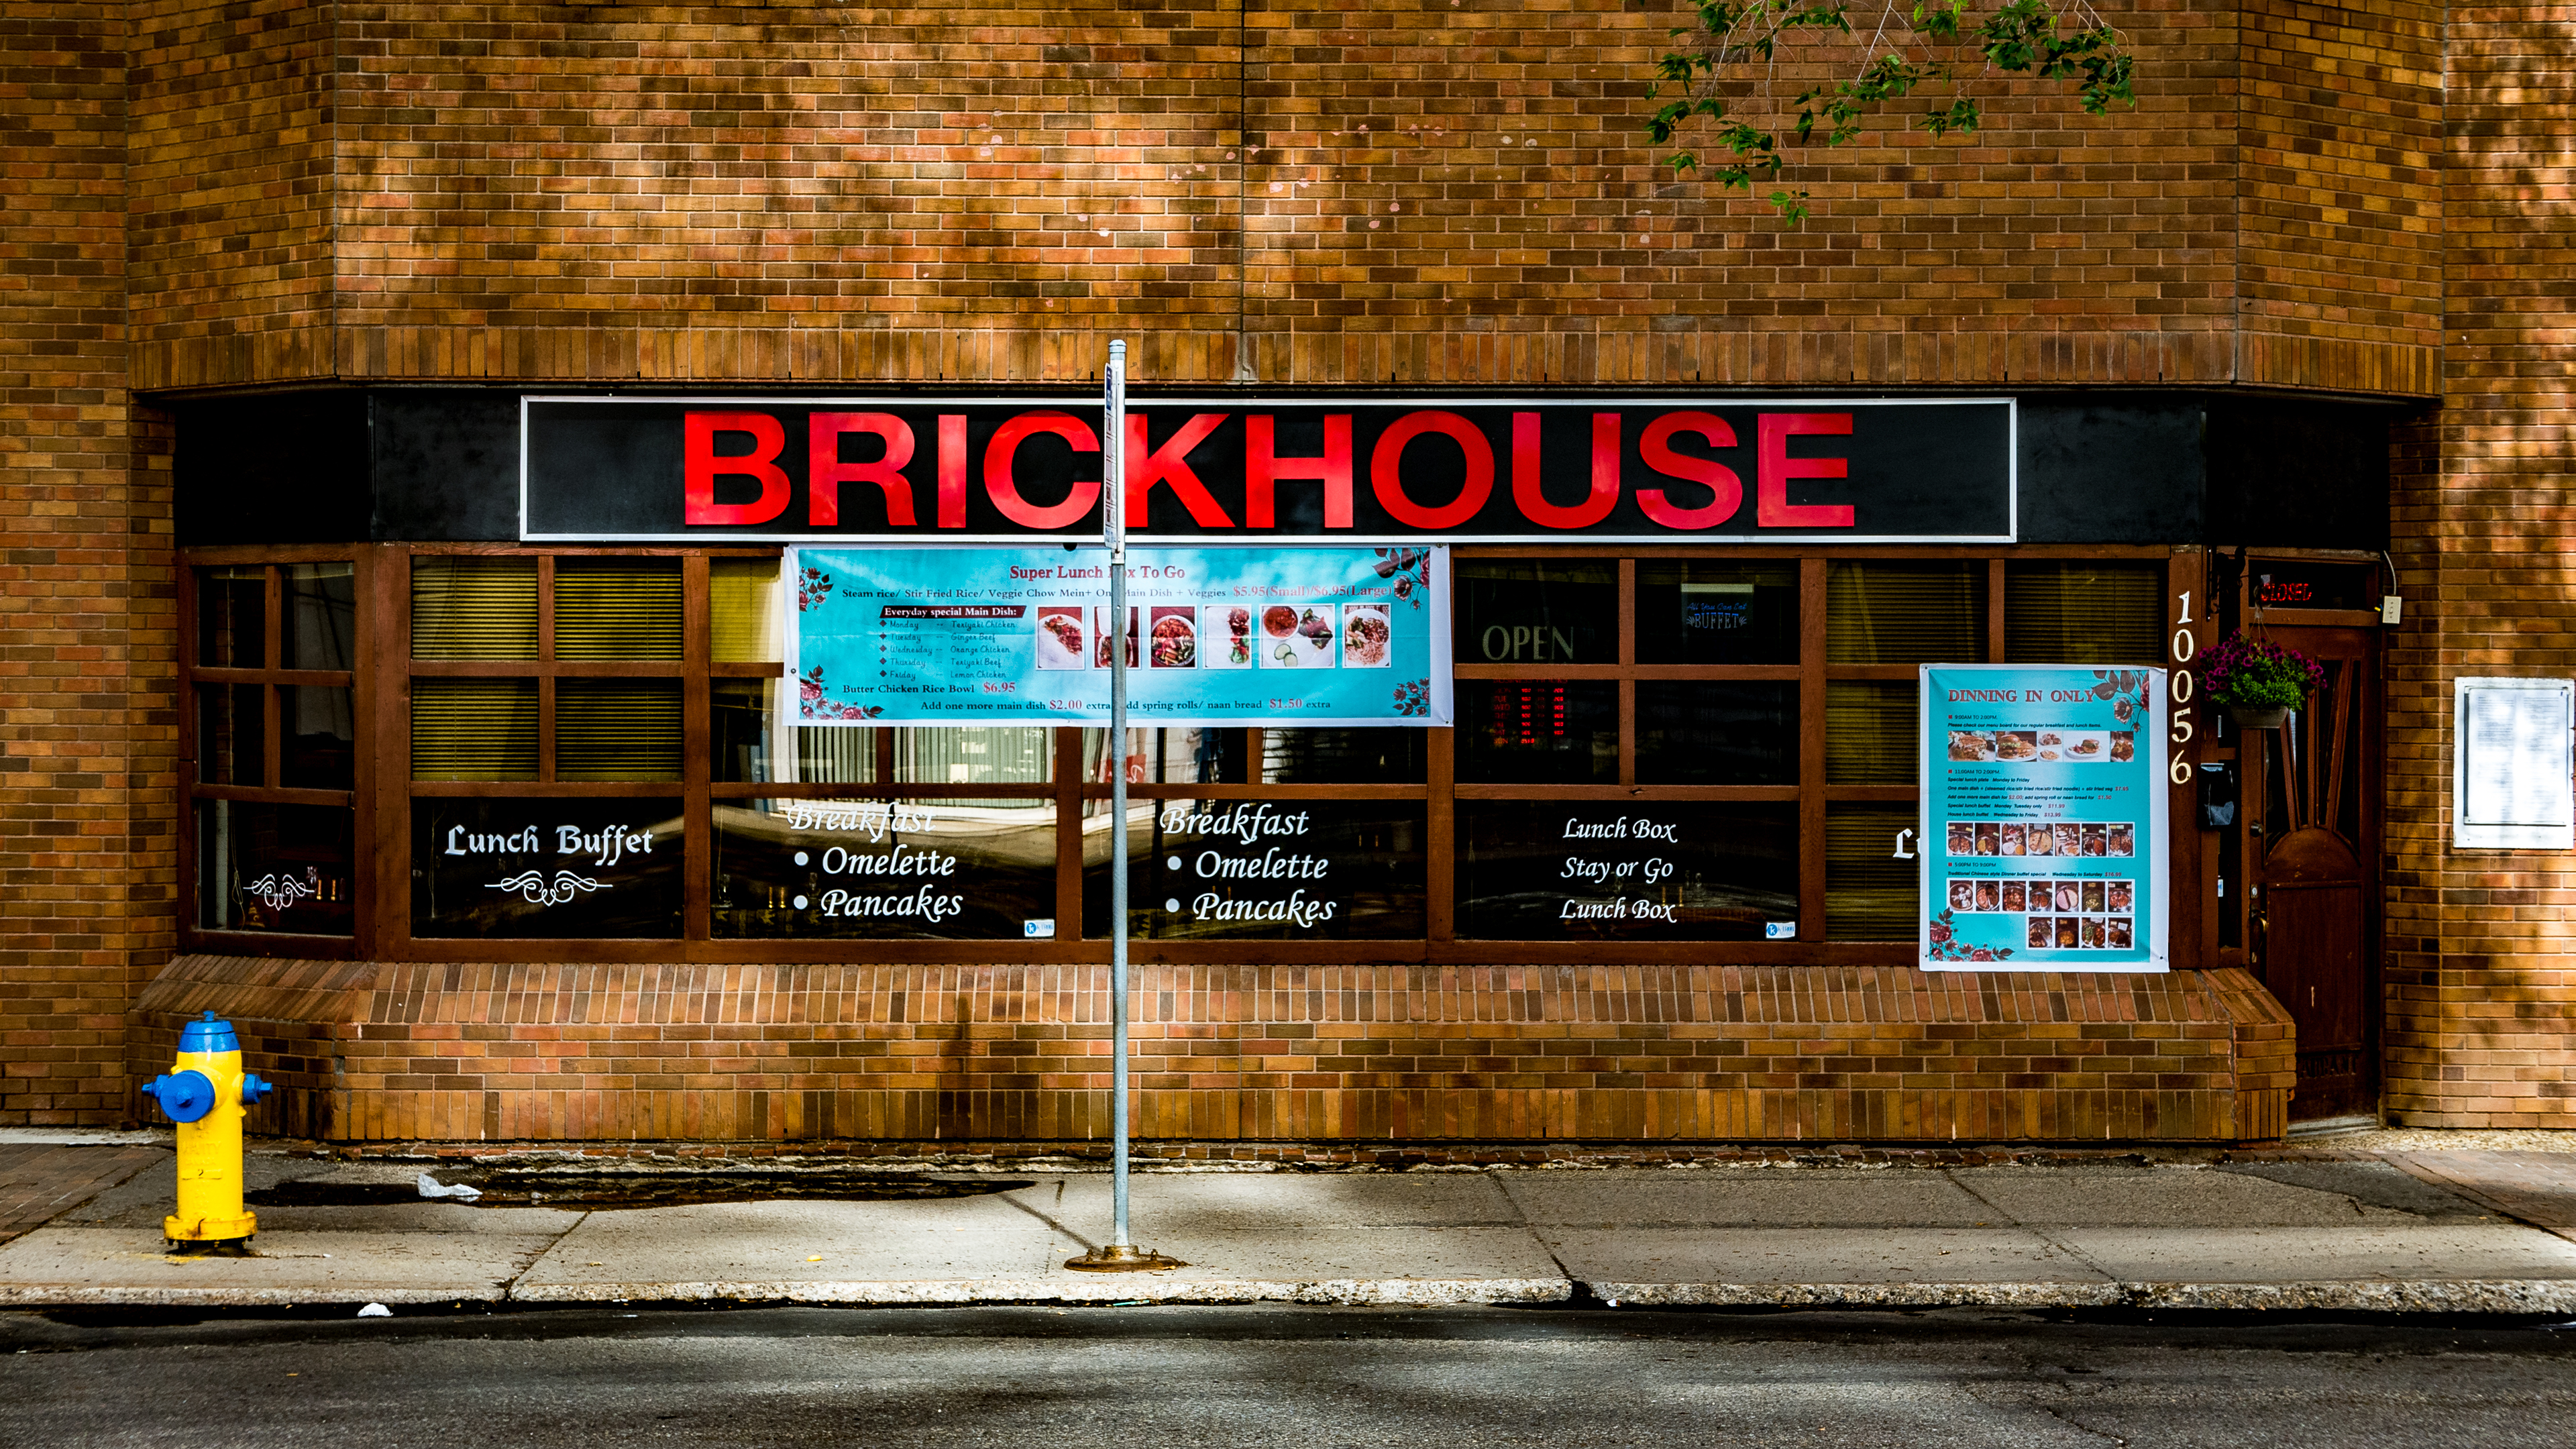 Brickhouse | Flickr - Photo Sharing!